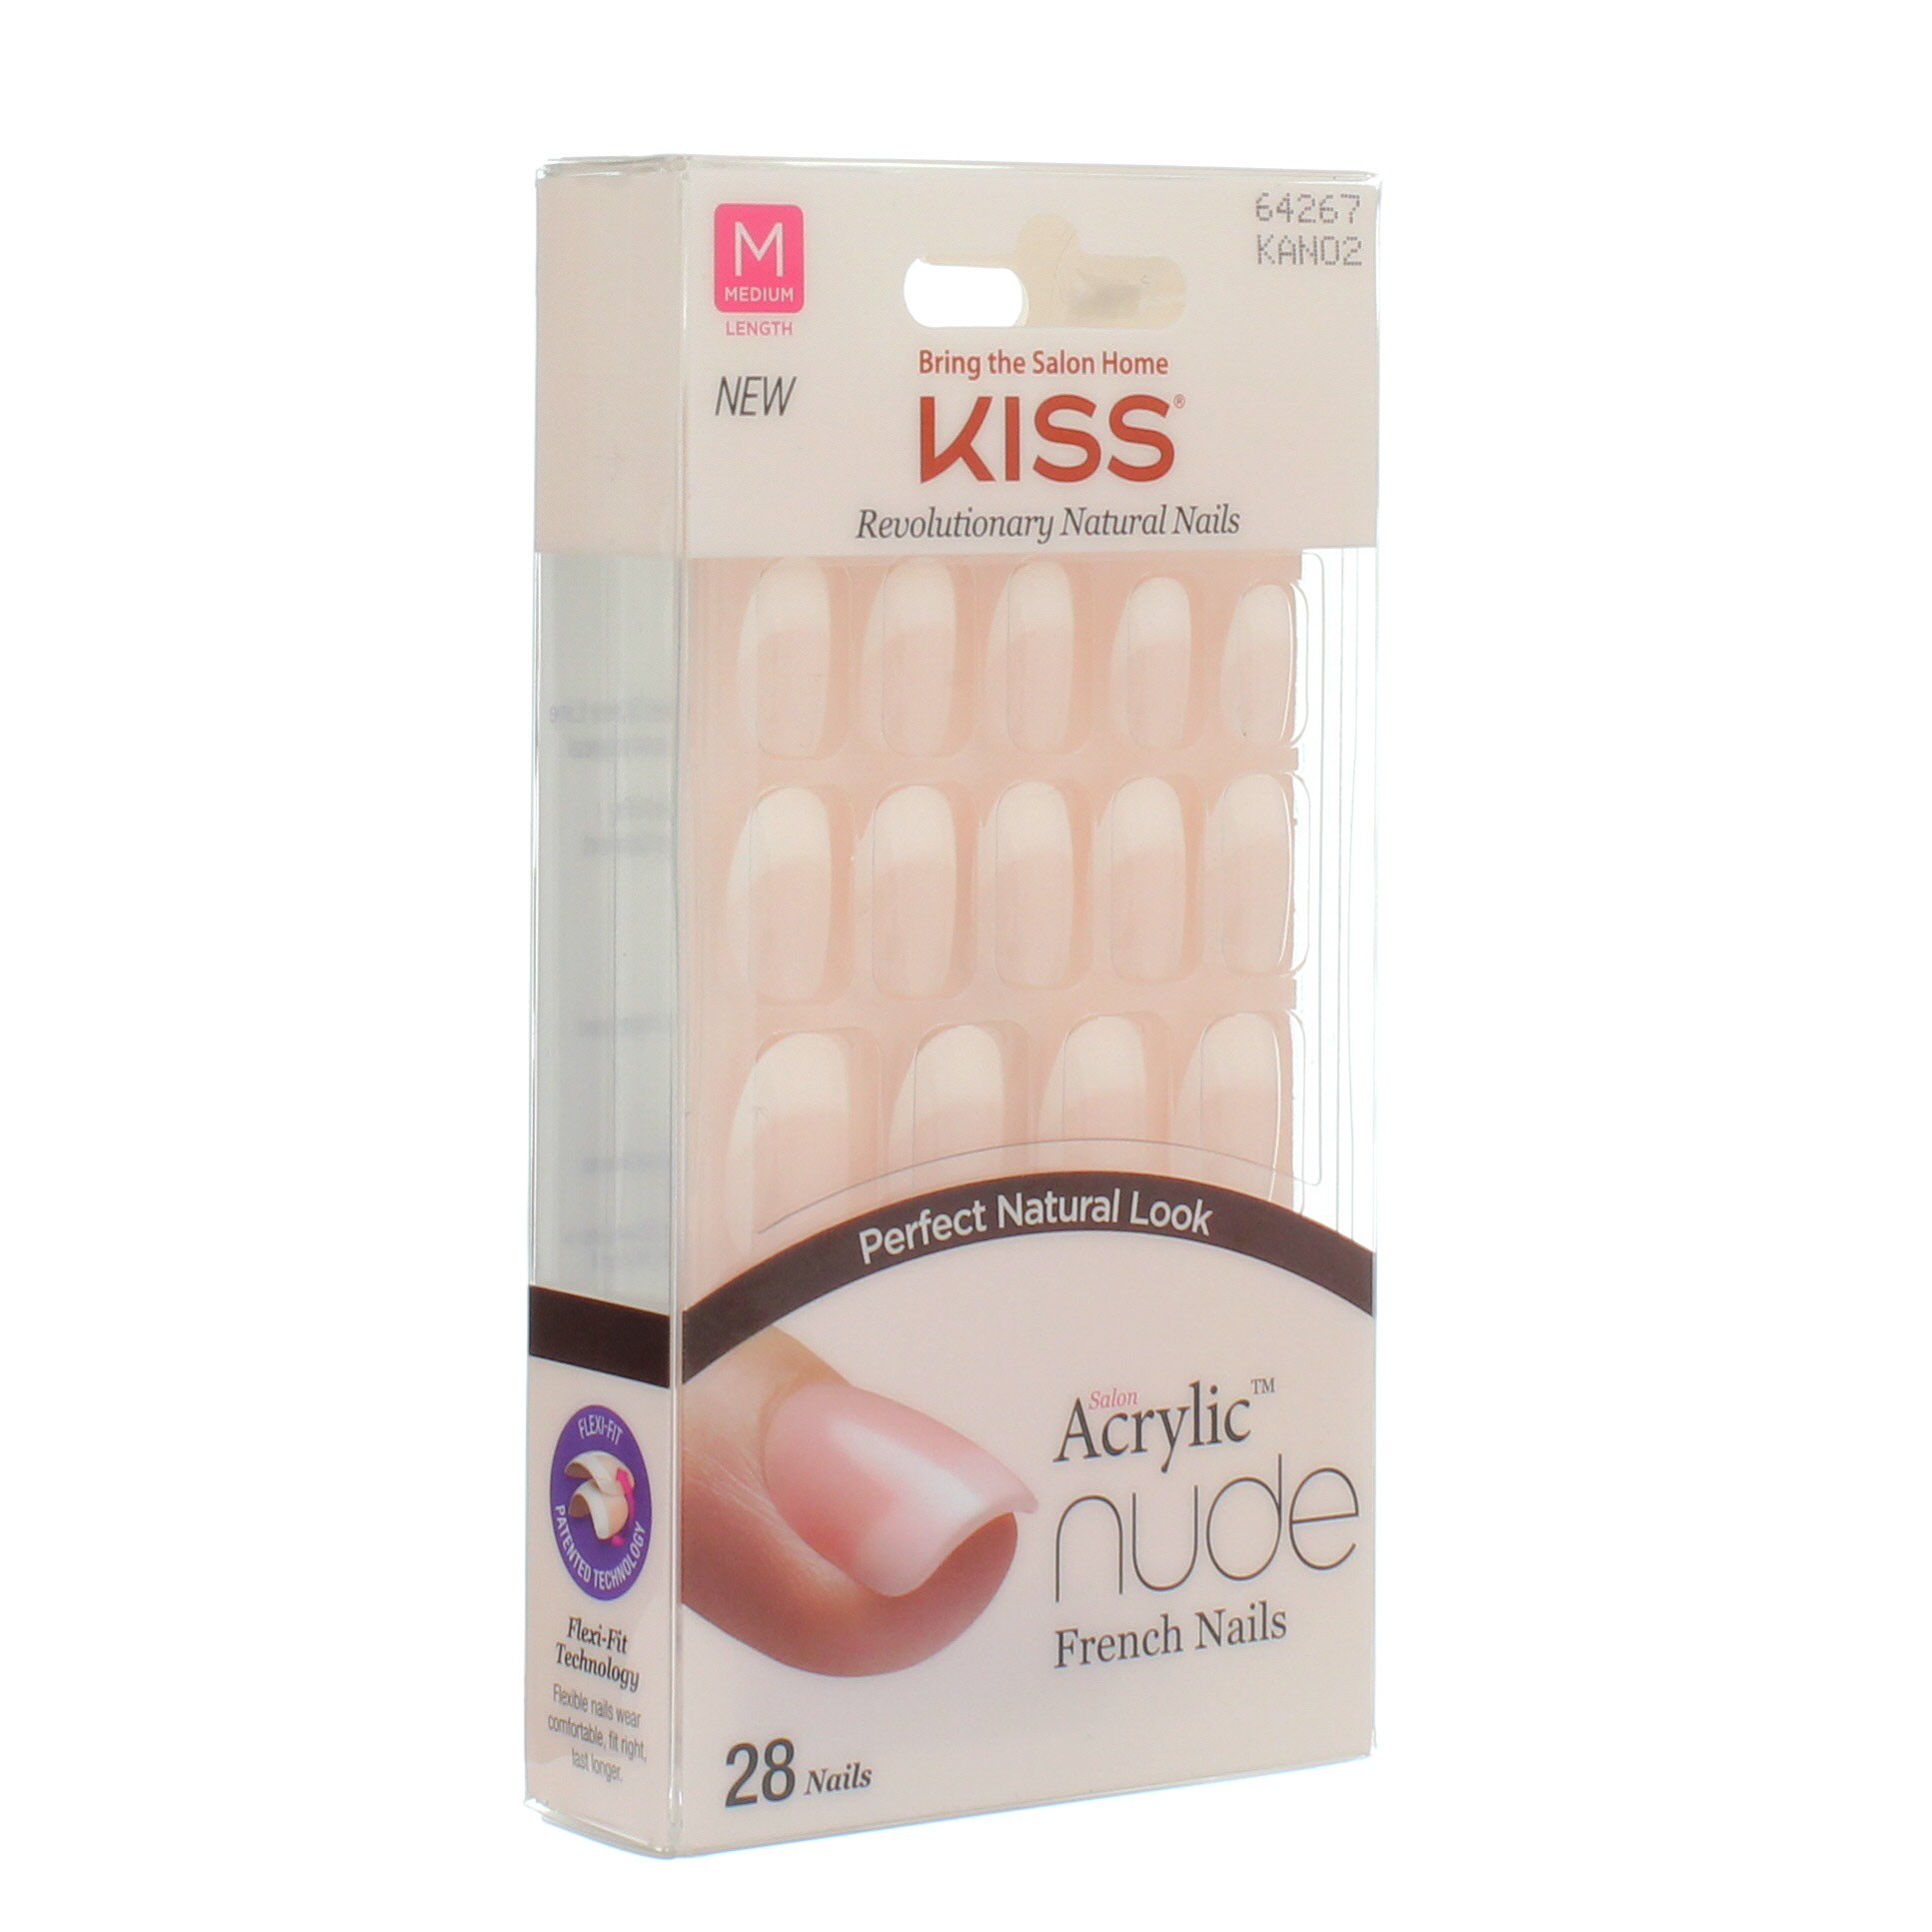 Kiss Cashmere Salon Acrylic French Nude Nails | Ulta Beauty